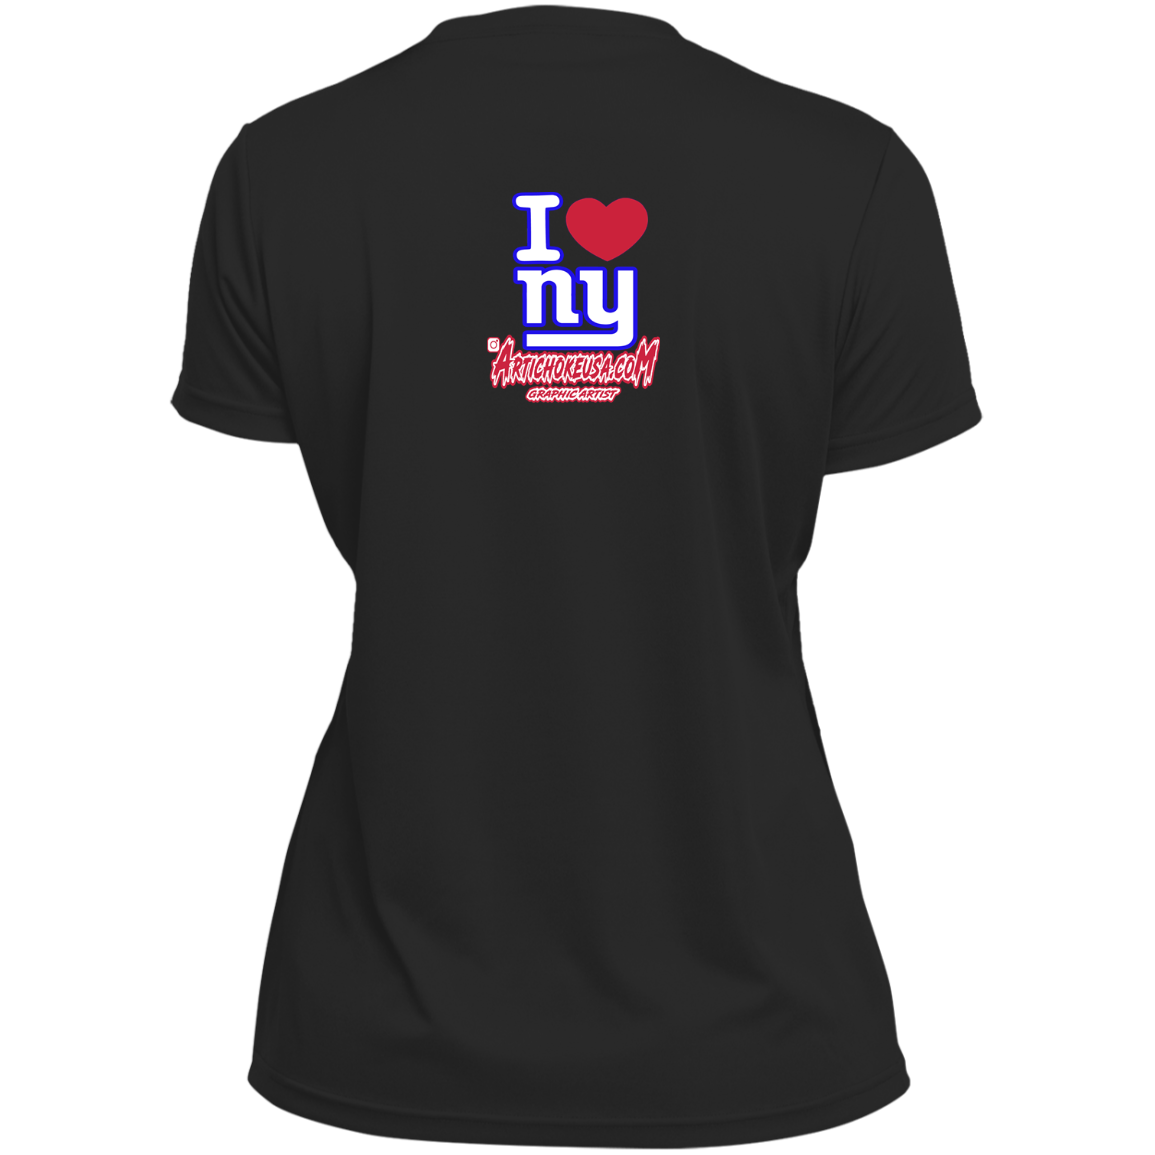 ArtichokeUSA Custom Design. I heart New York Giants. NY Giants Football Fan Art. Ladies’ Moisture-Wicking V-Neck Tee